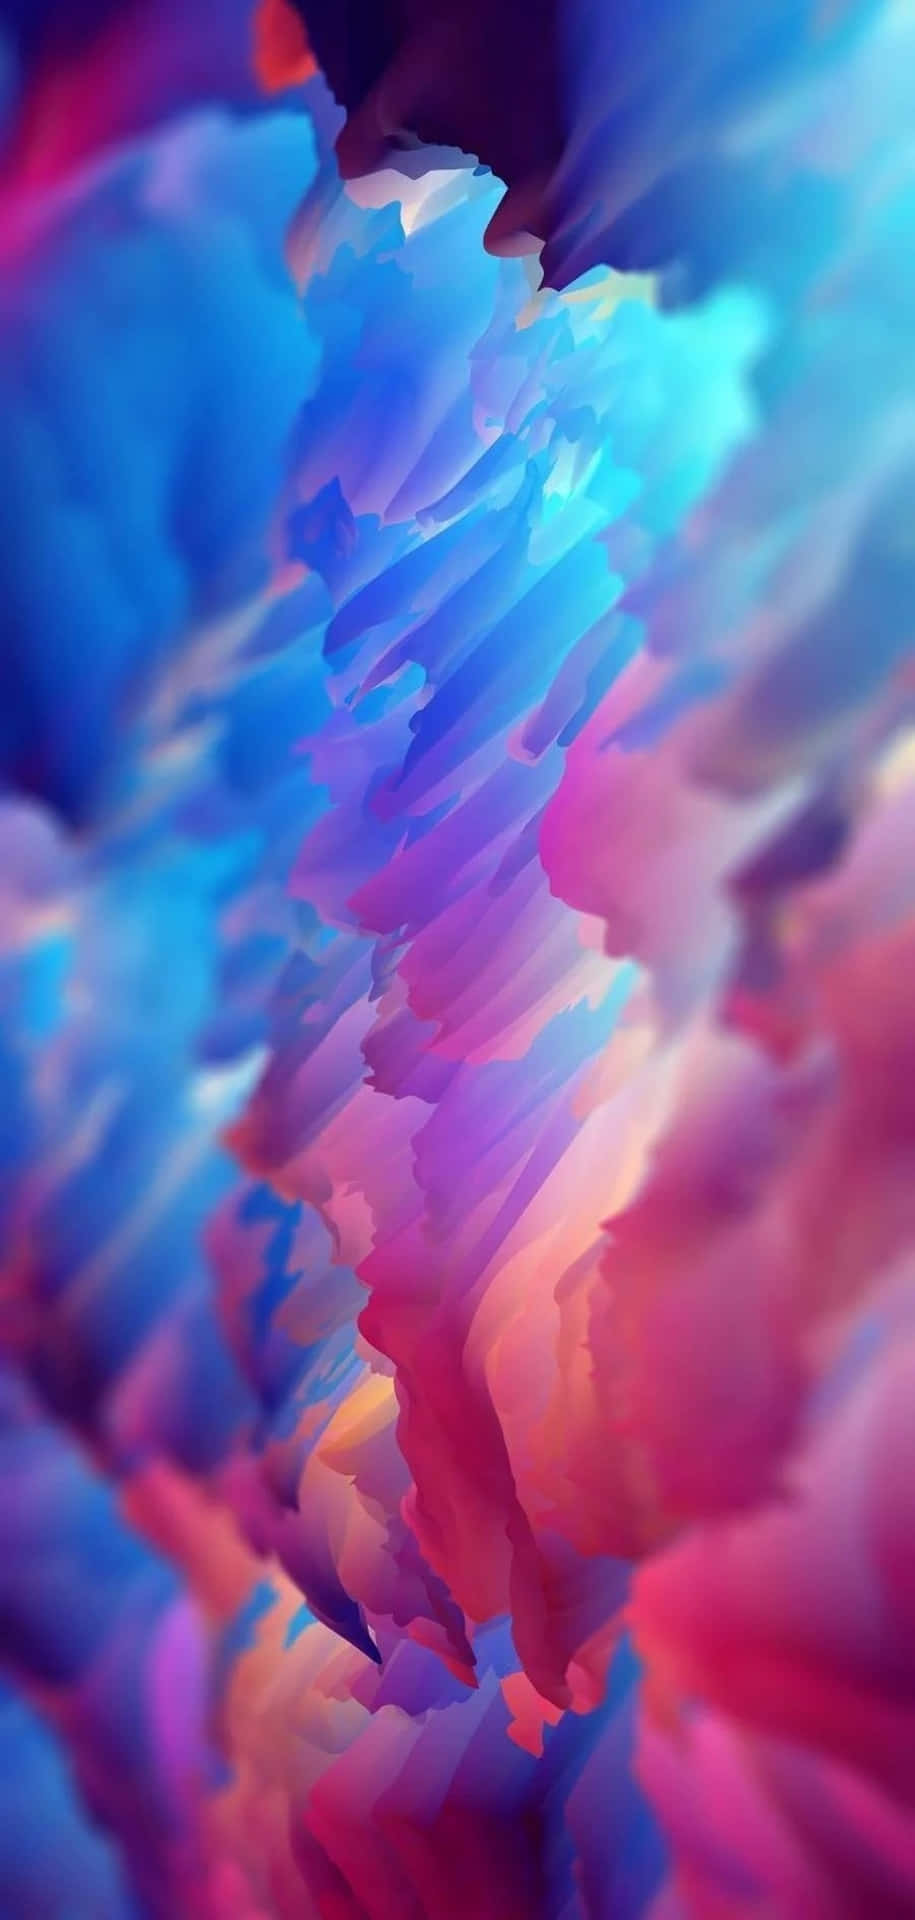 Vibrant Abstract Digital Art On 4k Phone